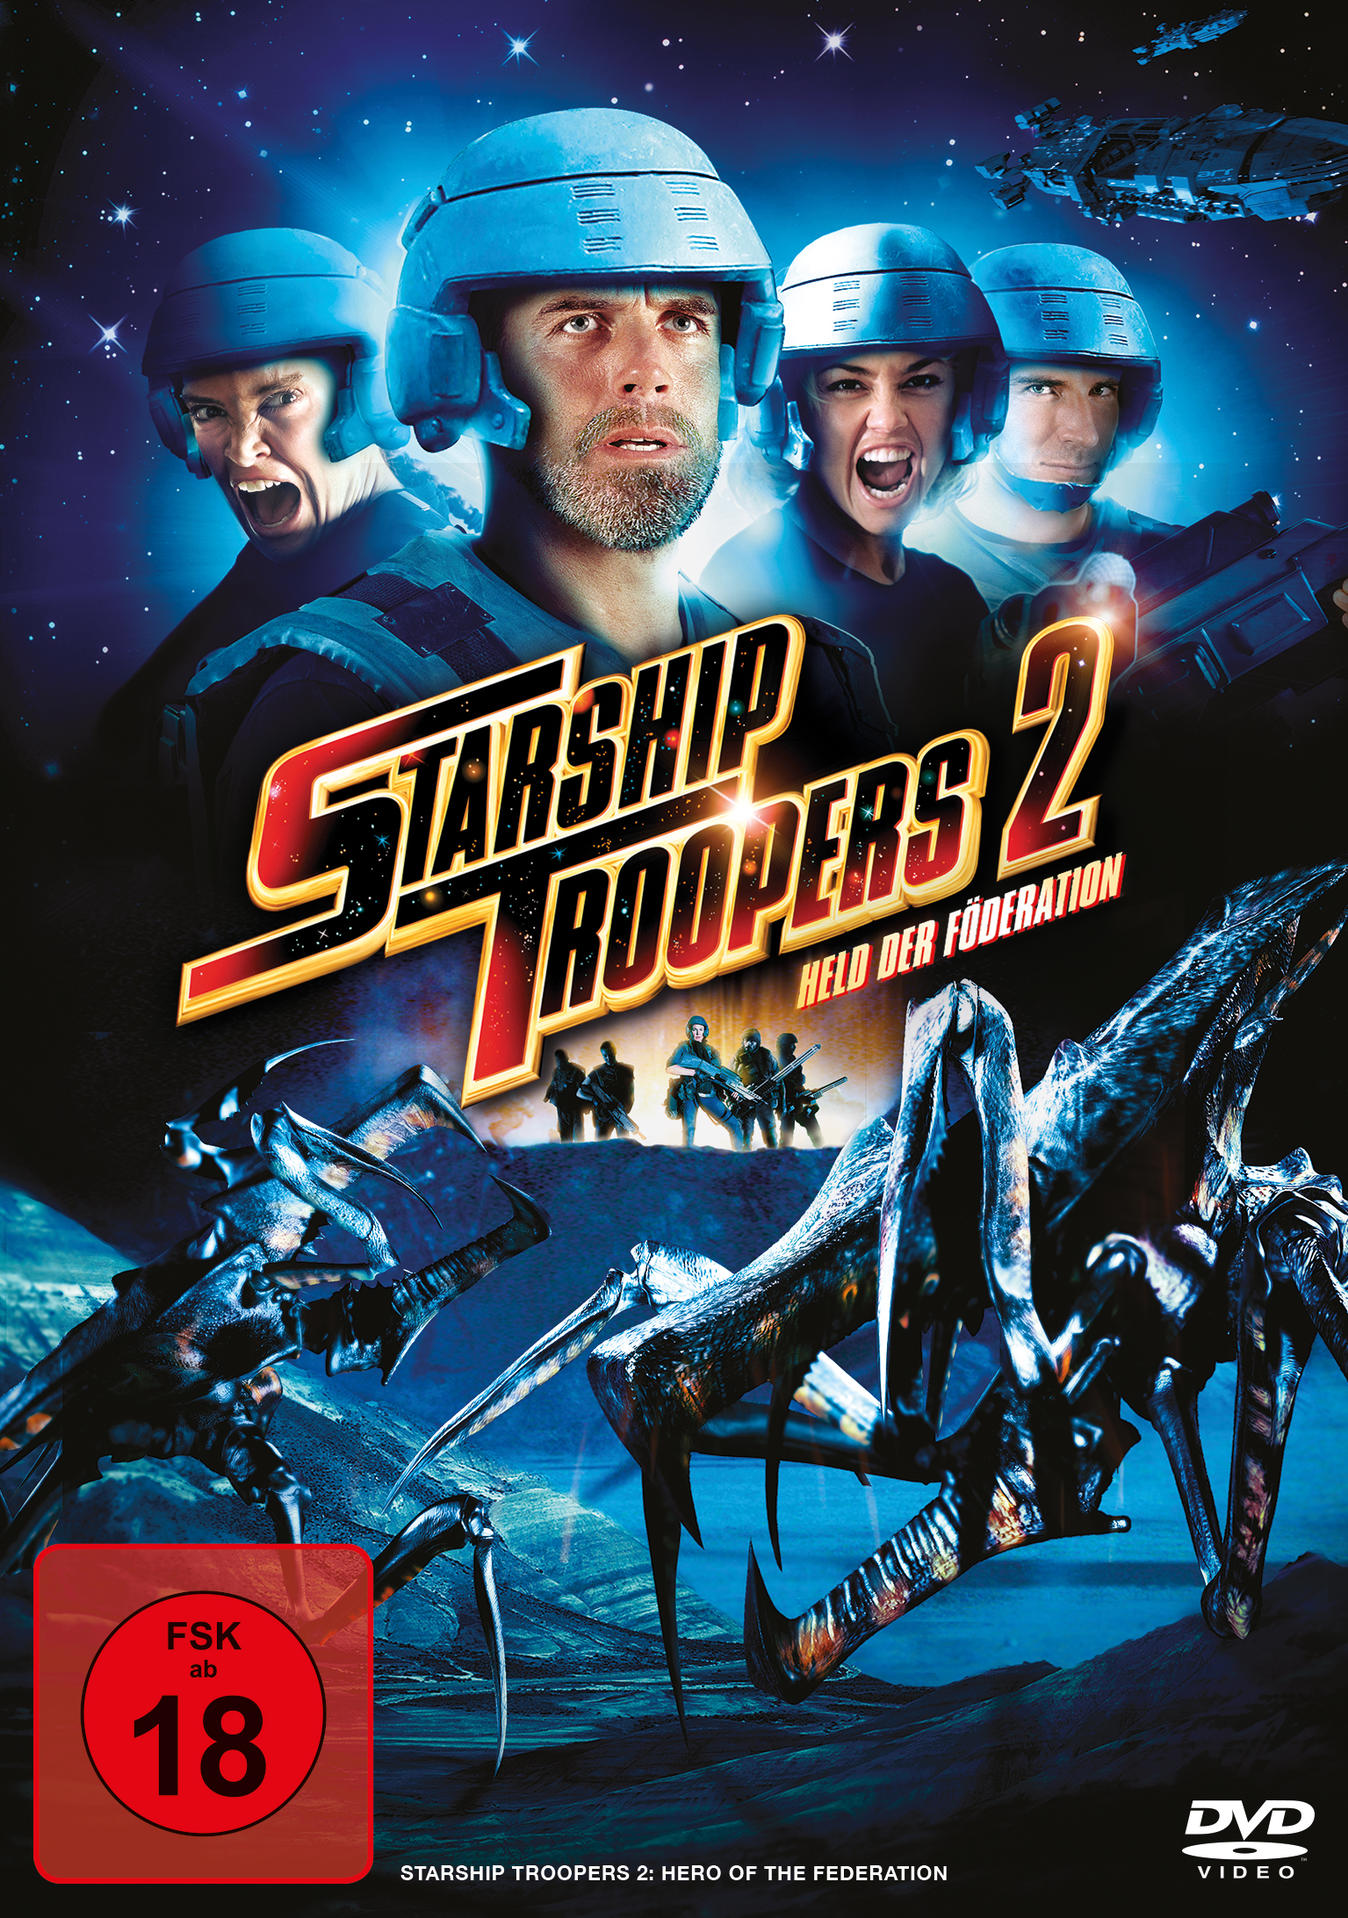 Starship troopers 2 - Héros Fédération de DVD la